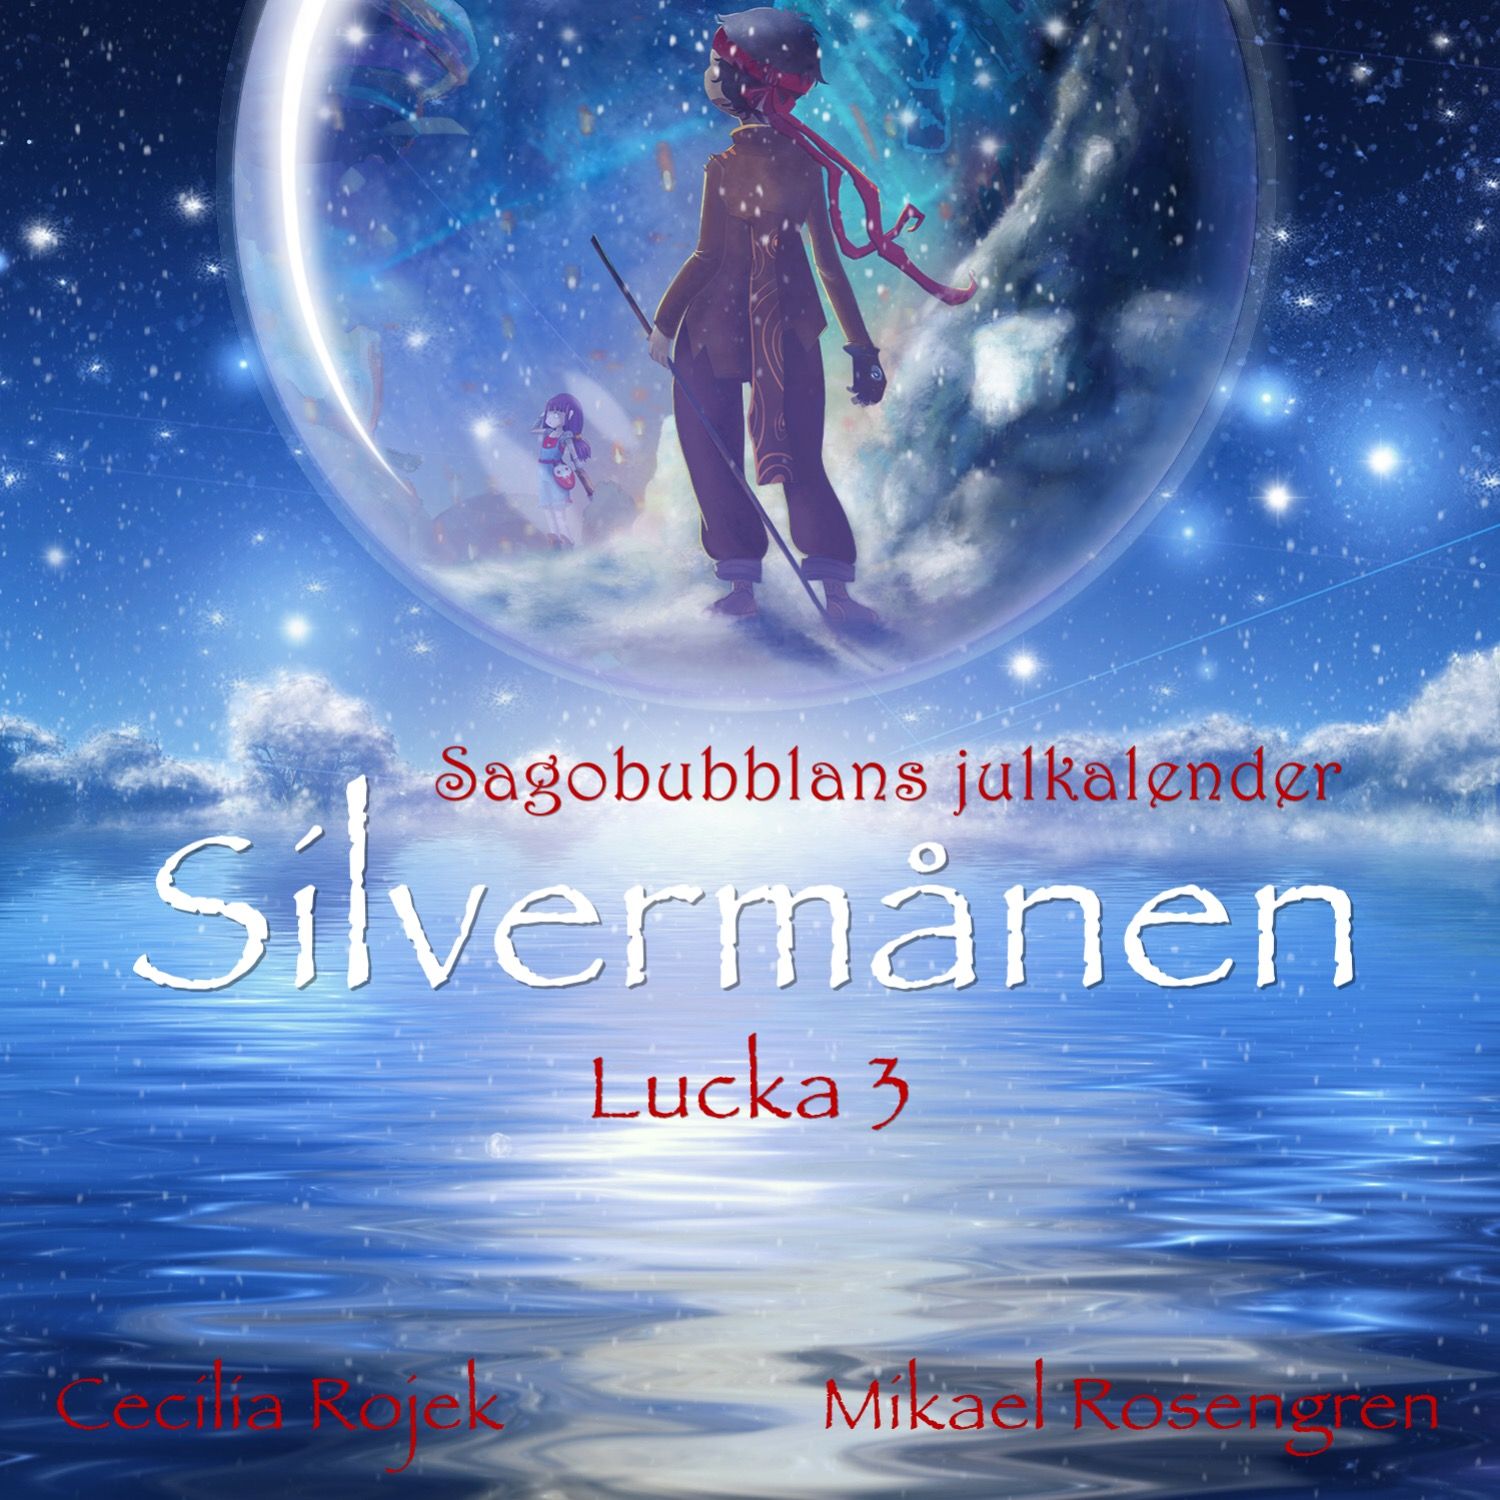 Silvermånen : Lucka 3, audiobook by Cecilia Rojek, Mikael Rosengren